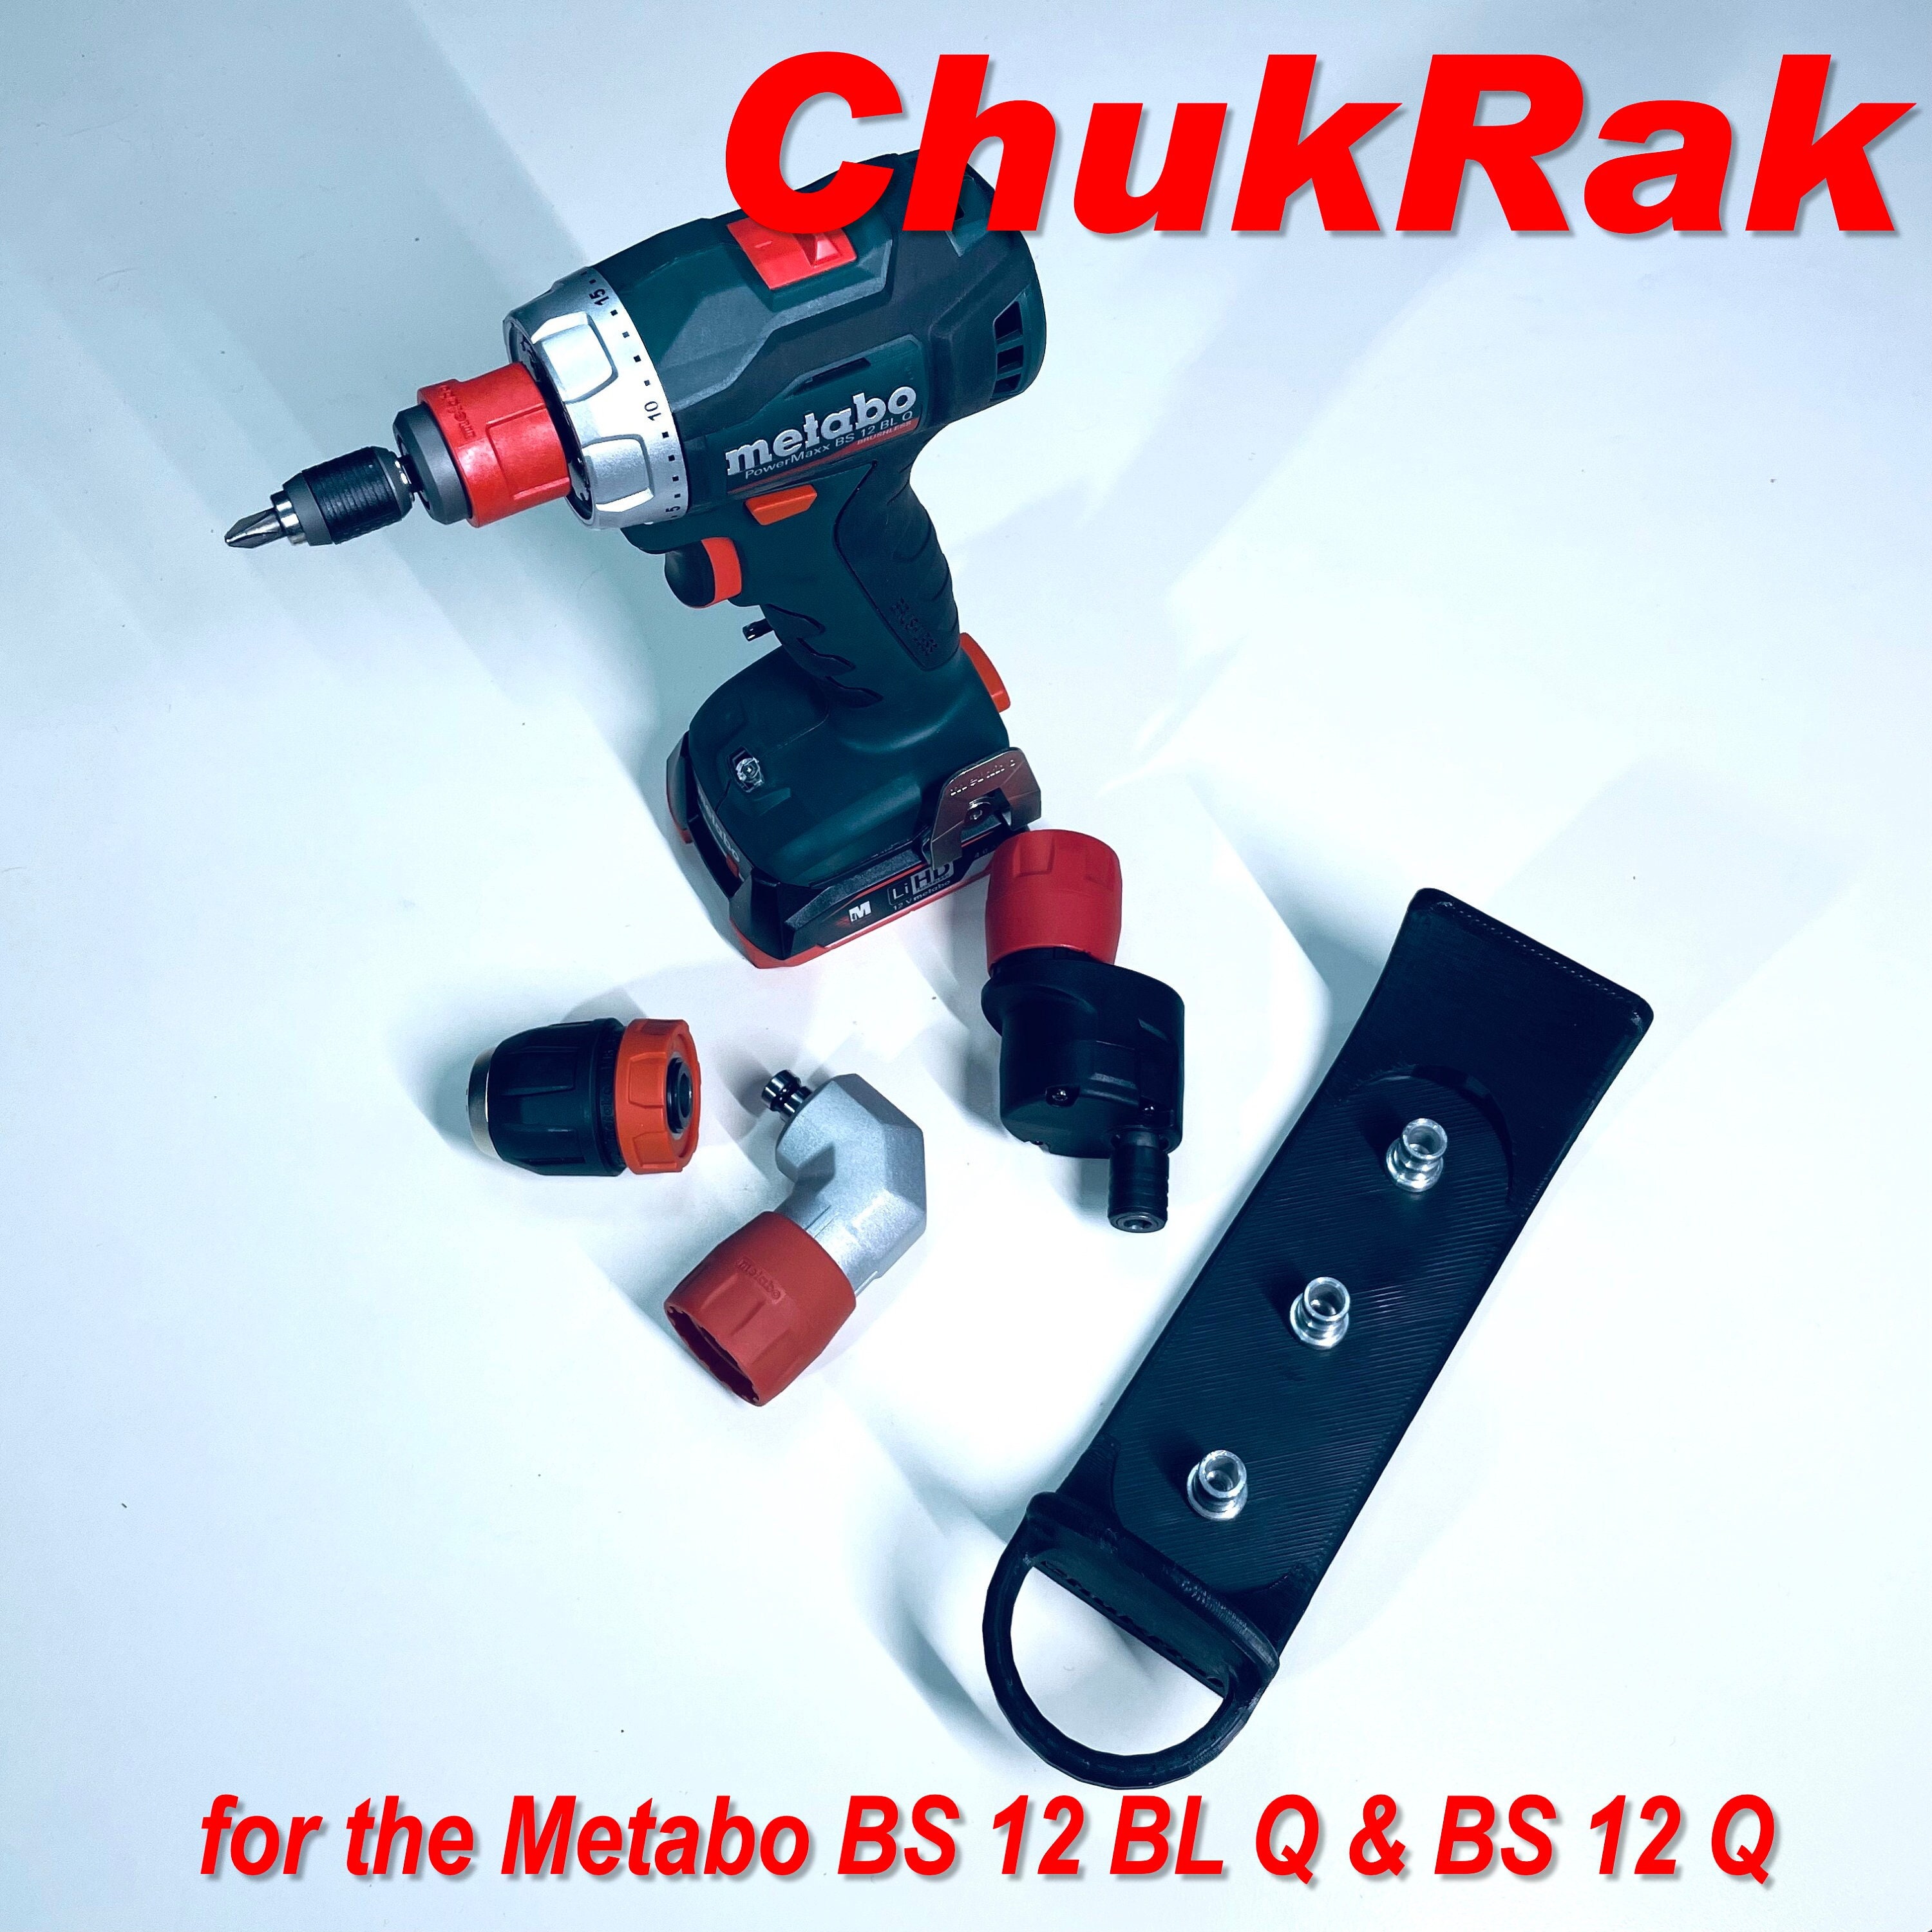 Chukrak Chuck Carrier for the Metabo Powermaxx BS12BLQ Drill - Etsy